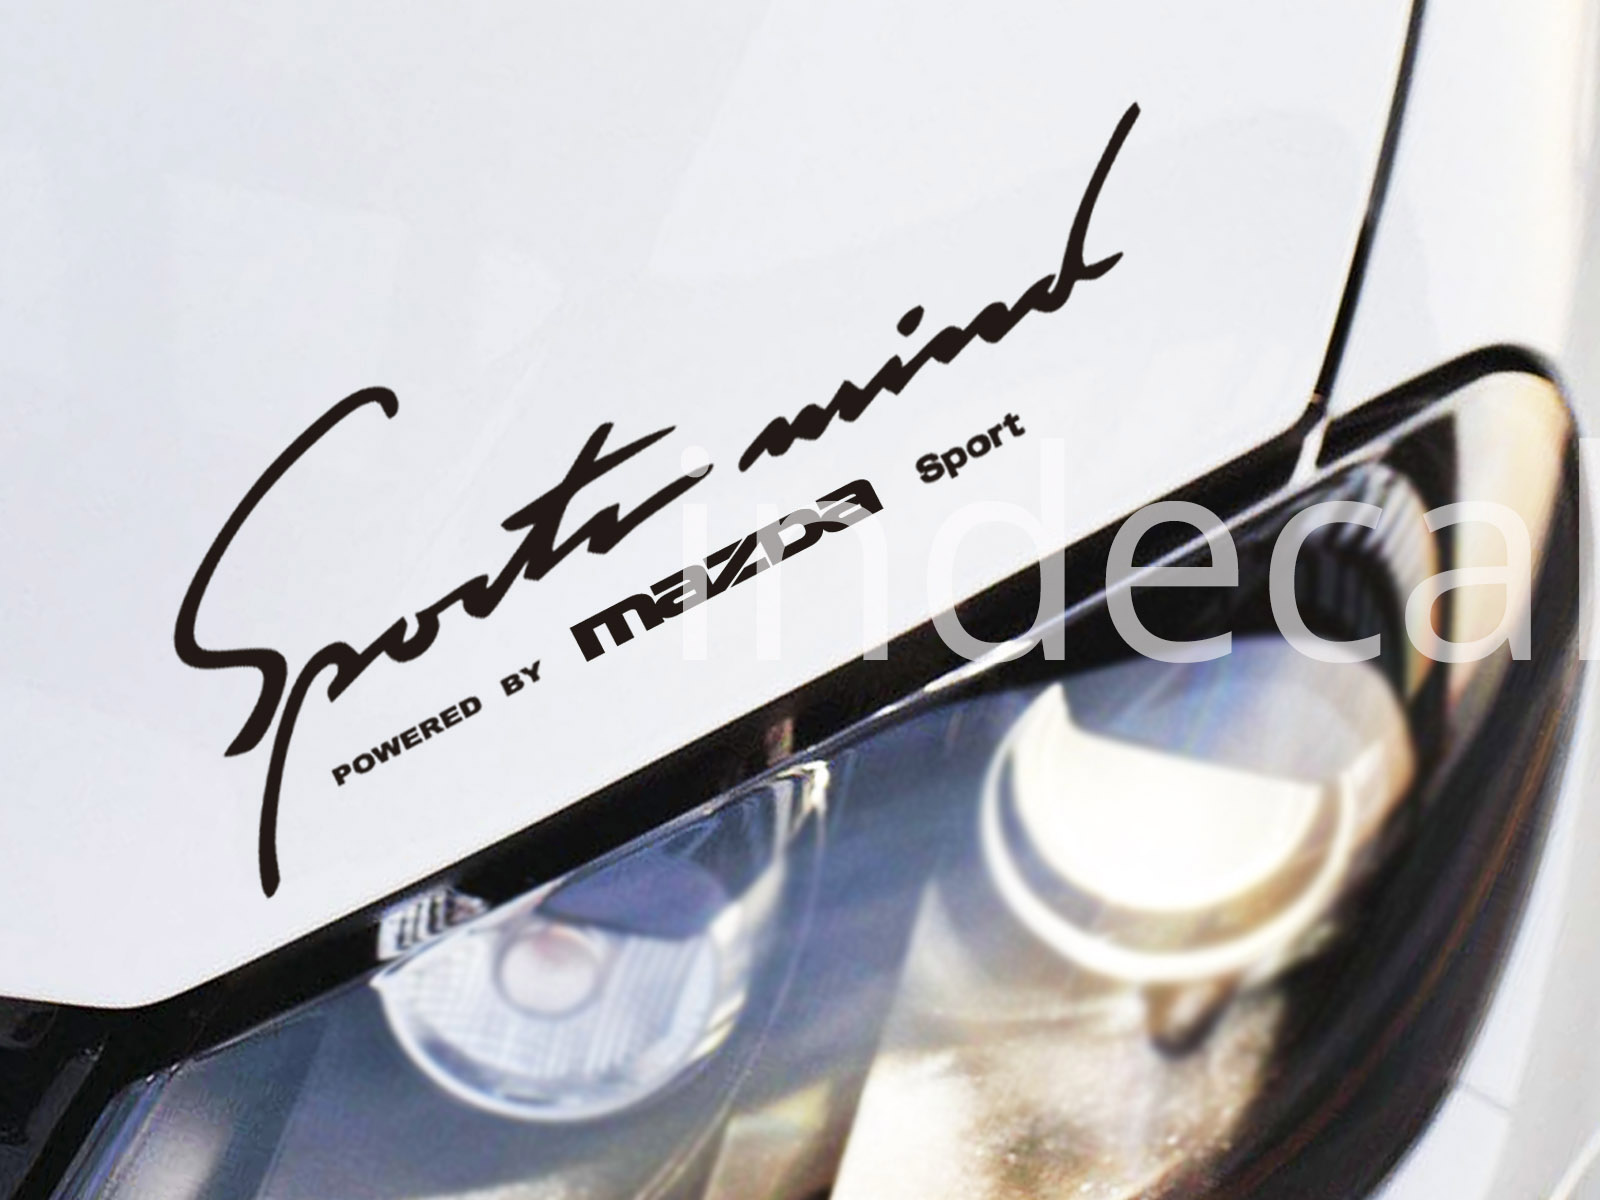 1 x Mazda Sports Mind Sticker - Black